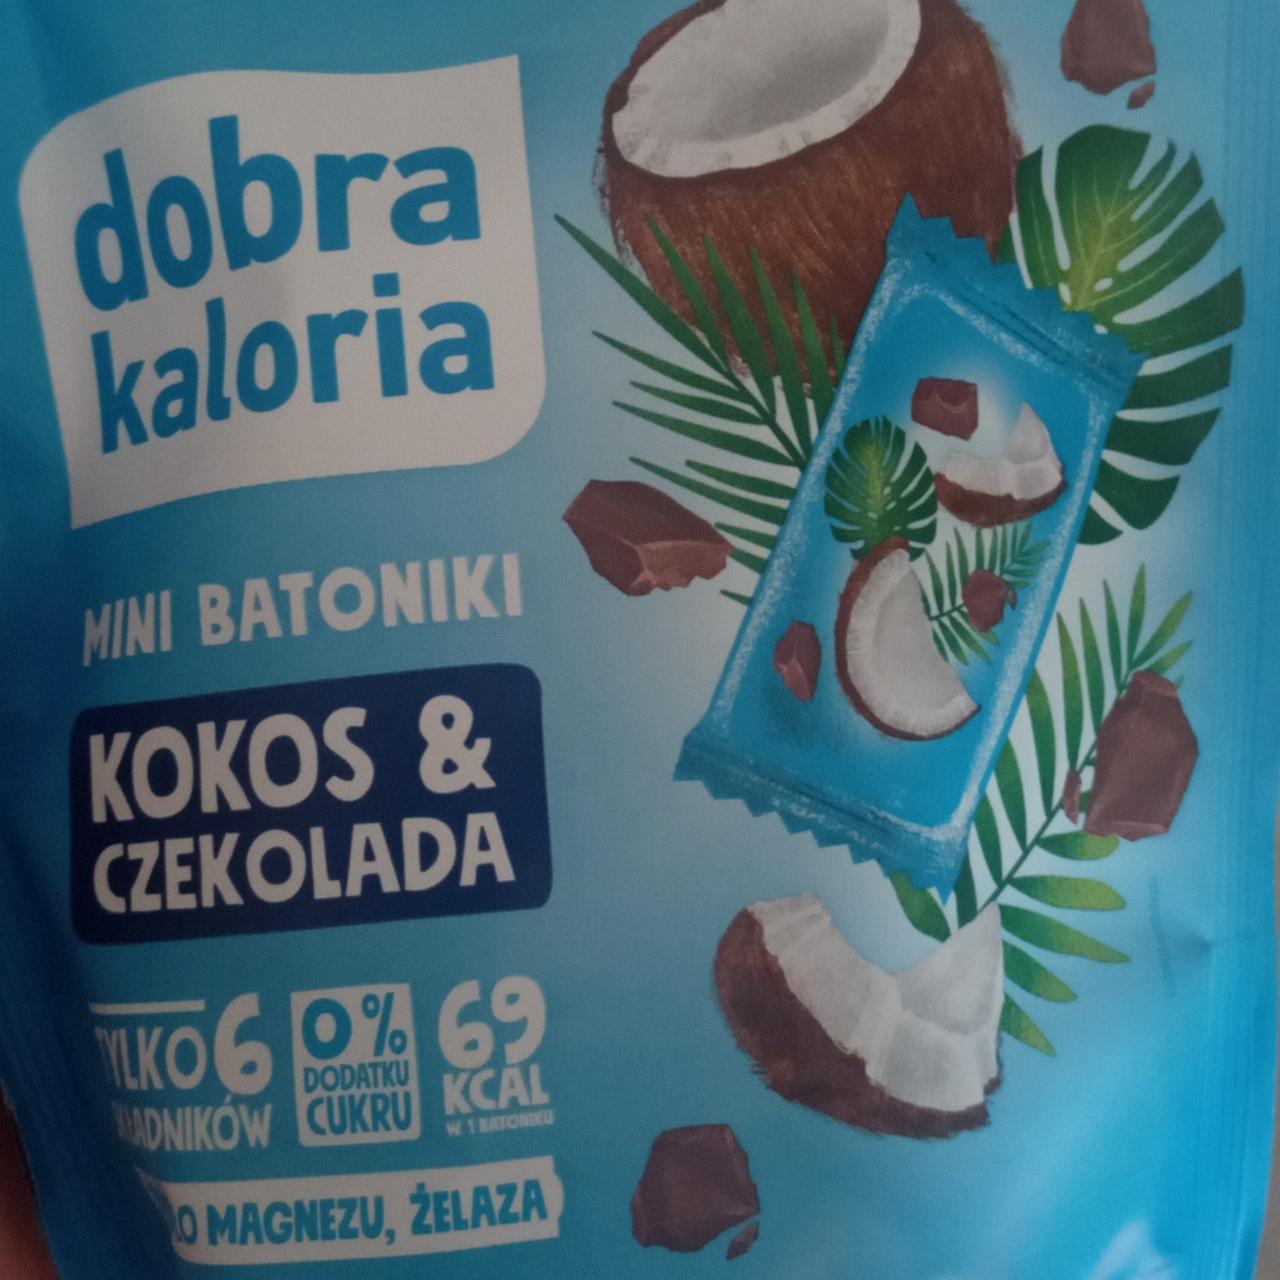 Zdjęcia - Mini batoniki kokos i czekolada Dobra kaloria